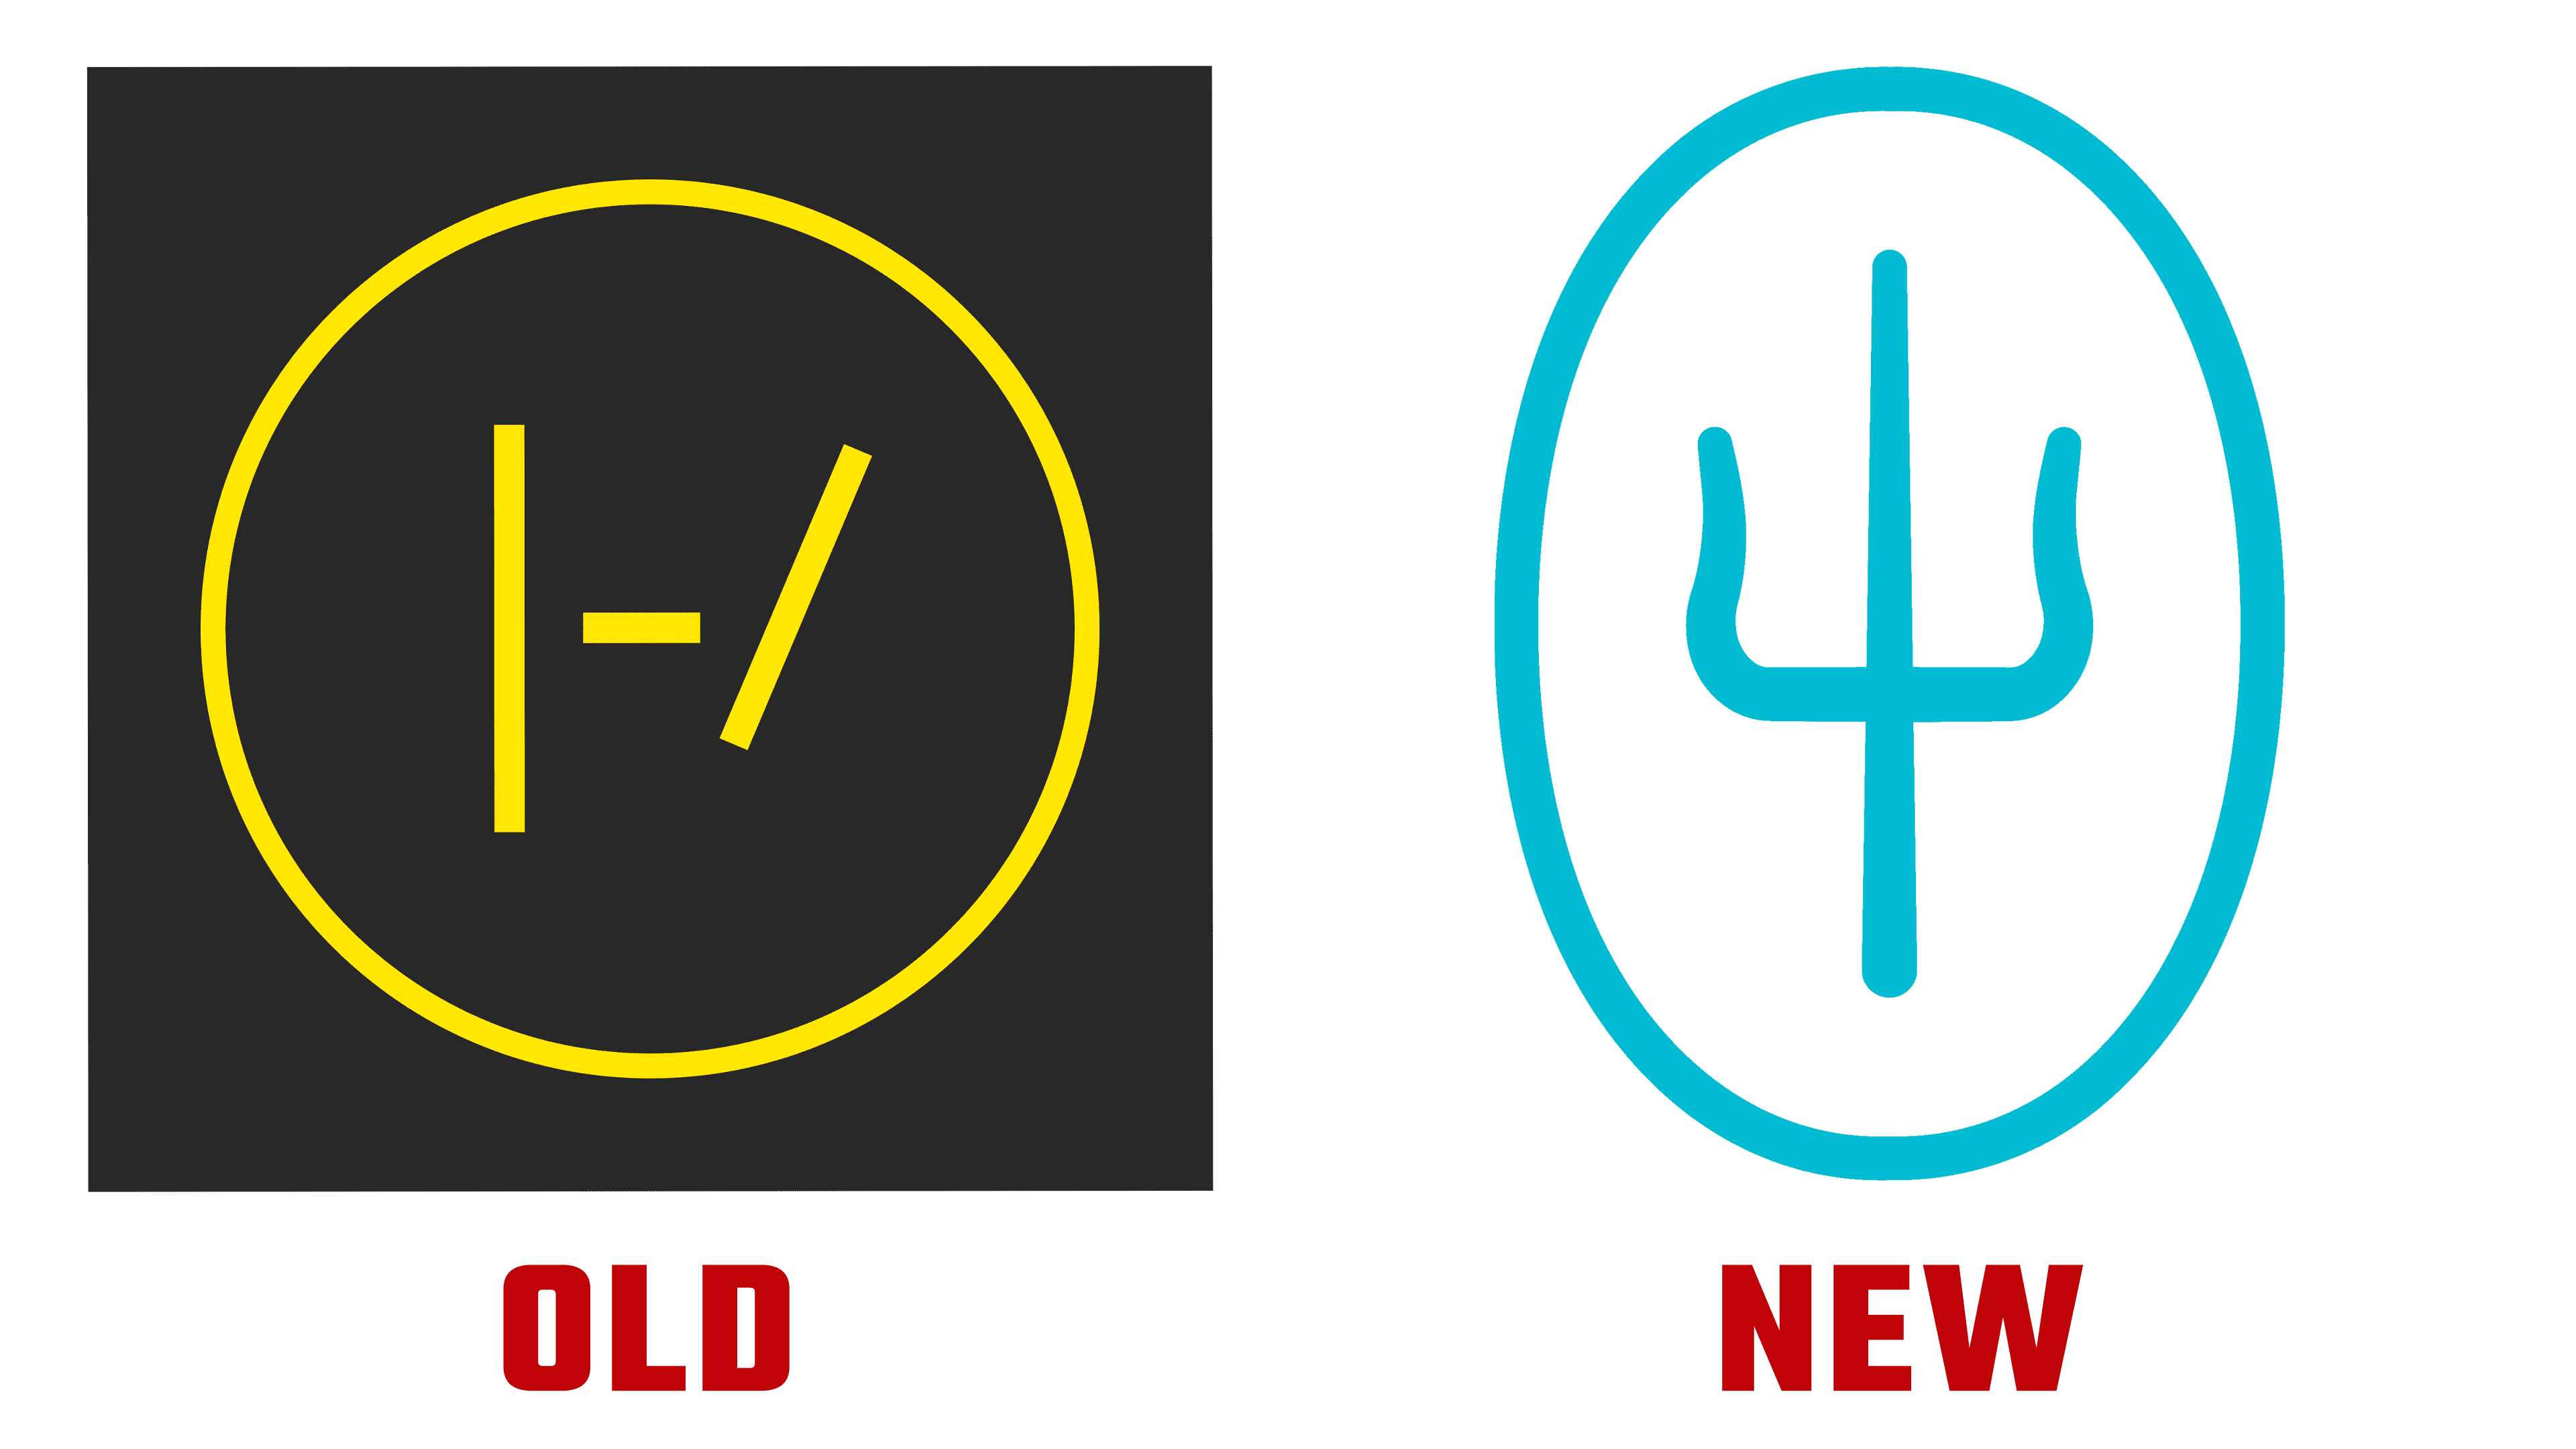 Twenty-One Pilots announces new album and reveals logo